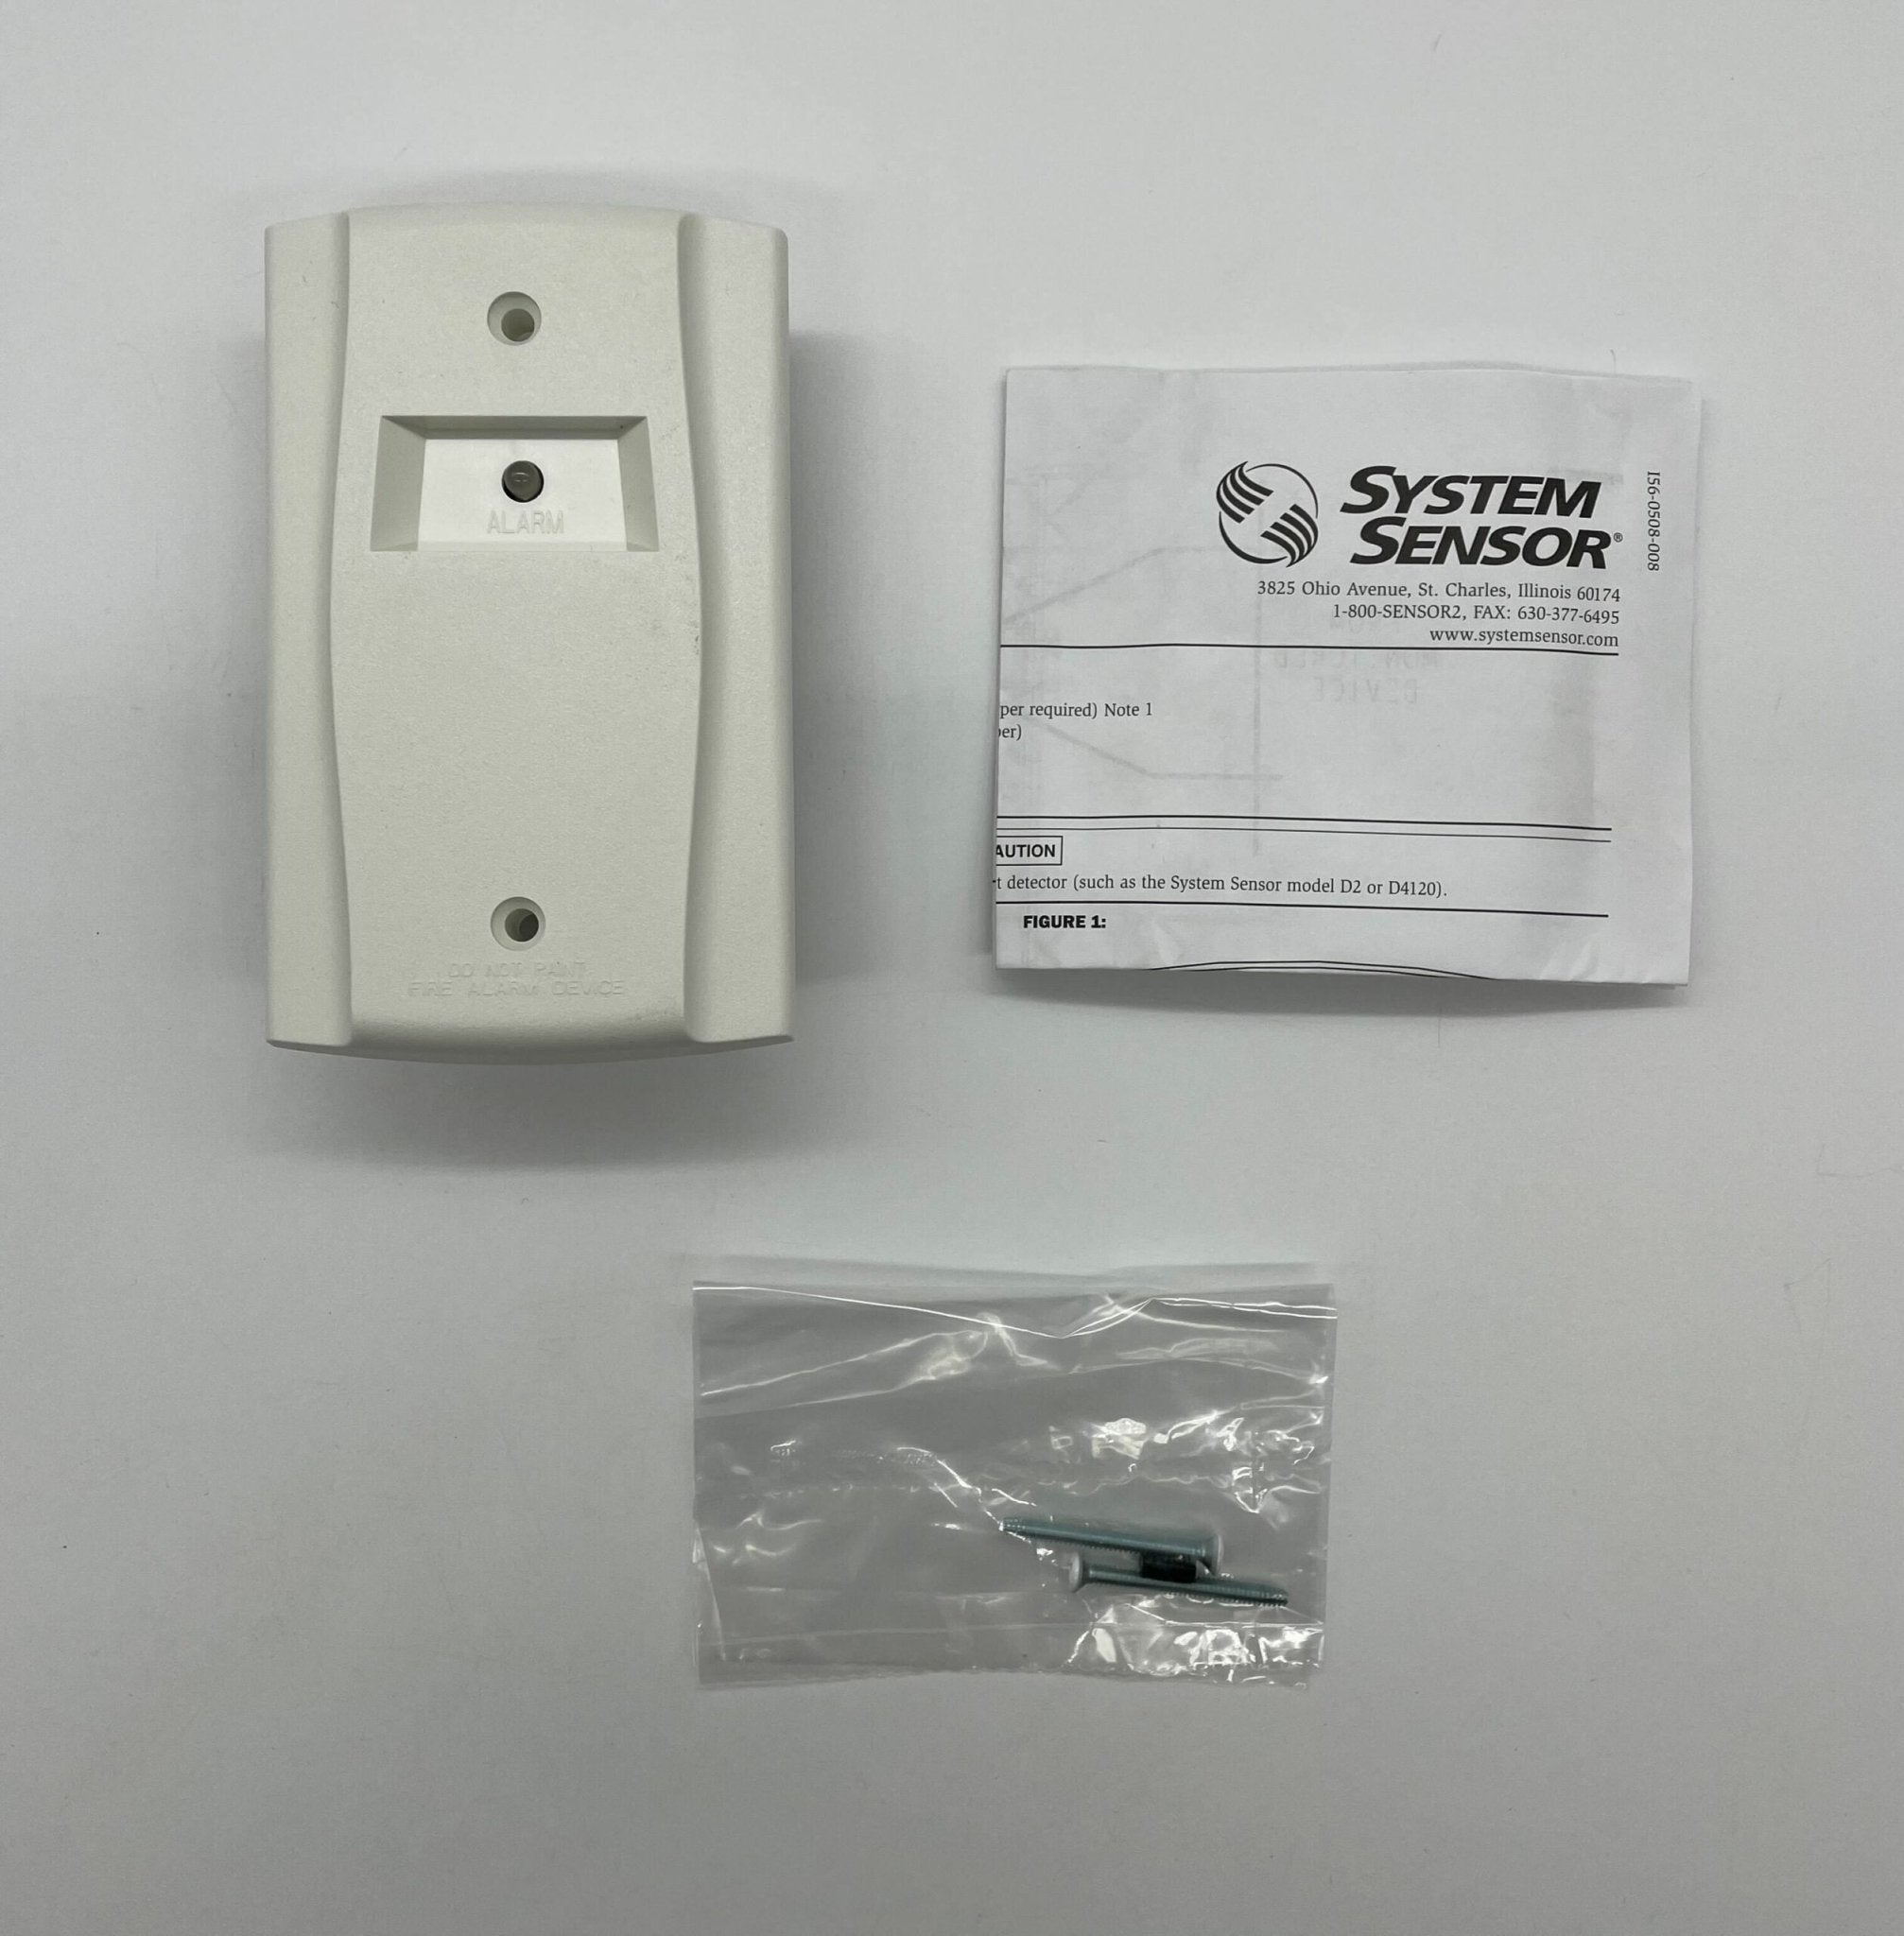 System Sensor RA100Z Remote Annunciator - The Fire Alarm Supplier